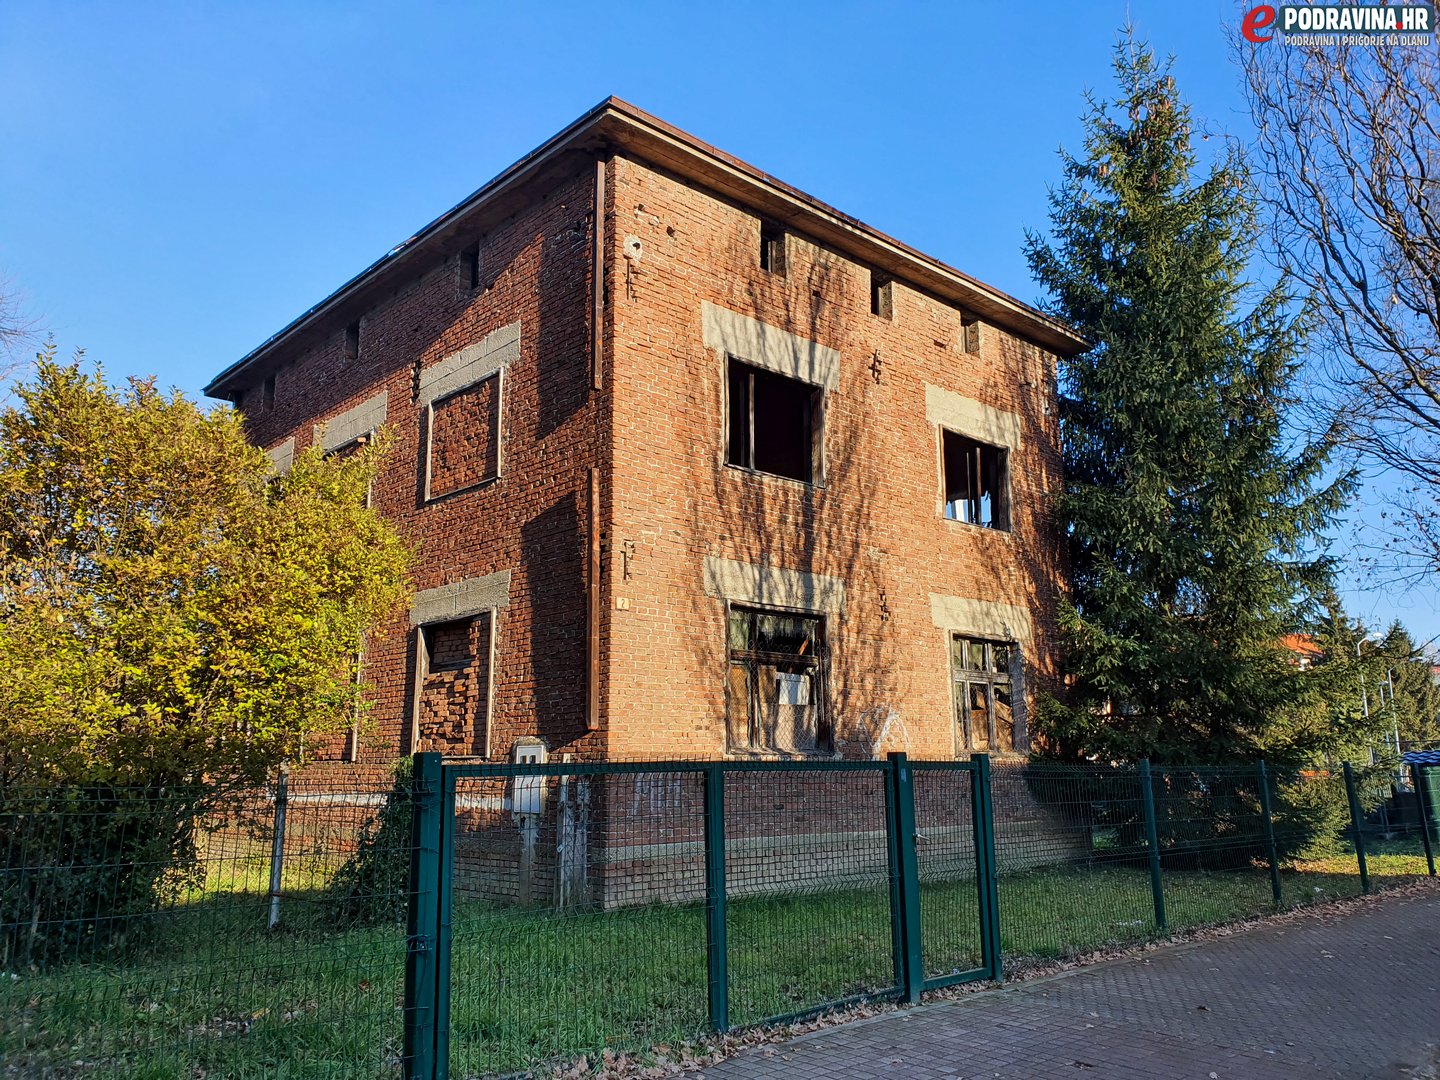 Kuća Meštrovićeva